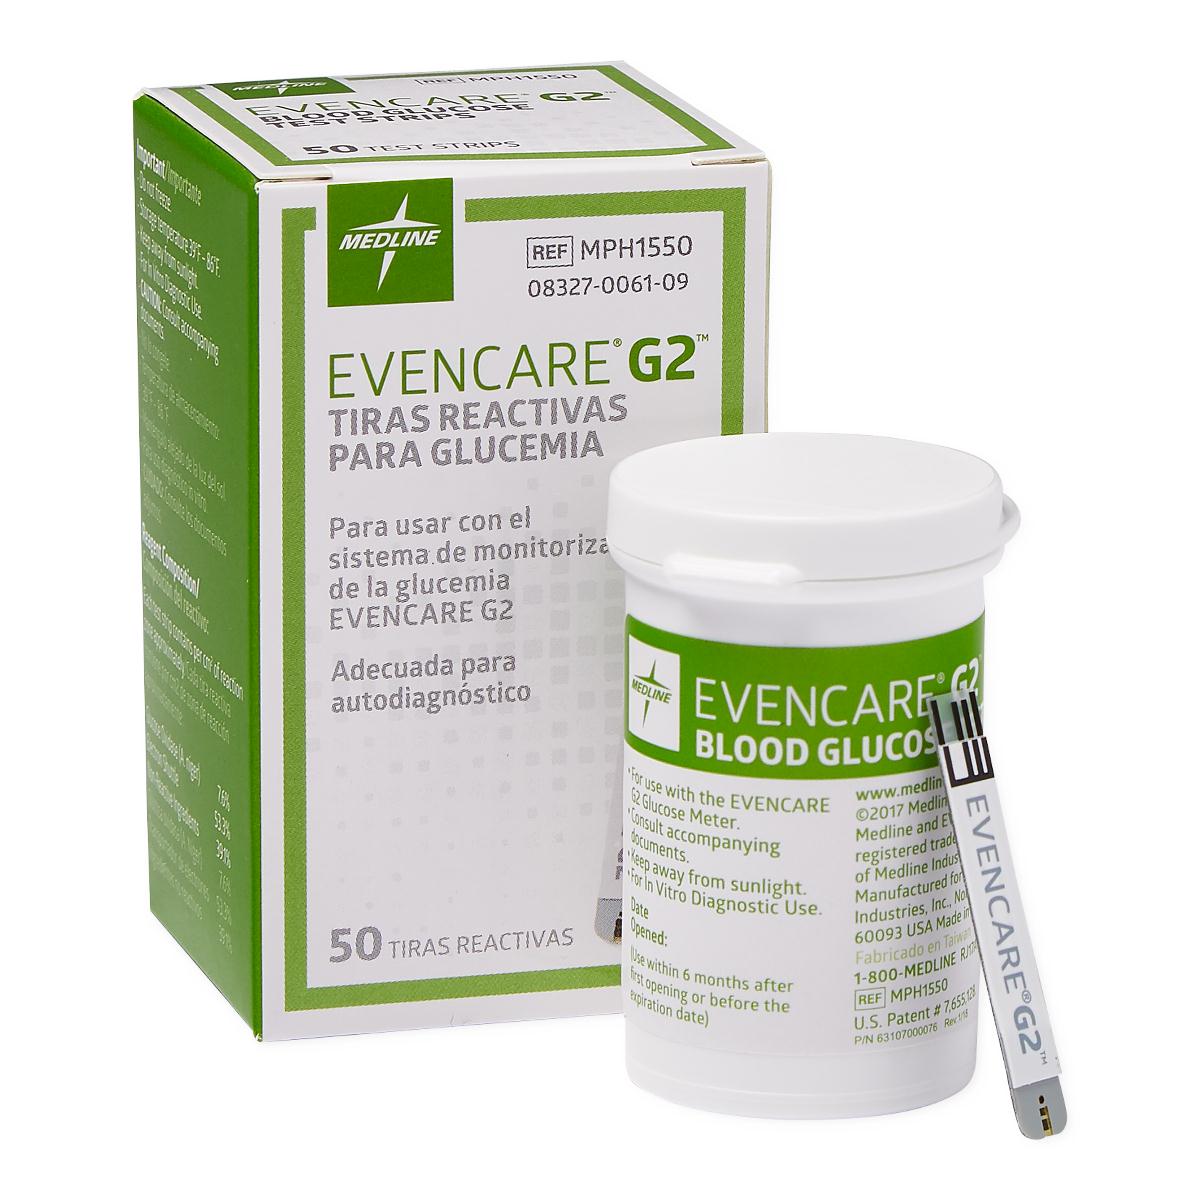 600 Each-Case / 600 / Evencare G2 Exam & Diagnostic Supplies - MEDLINE - Wasatch Medical Supply